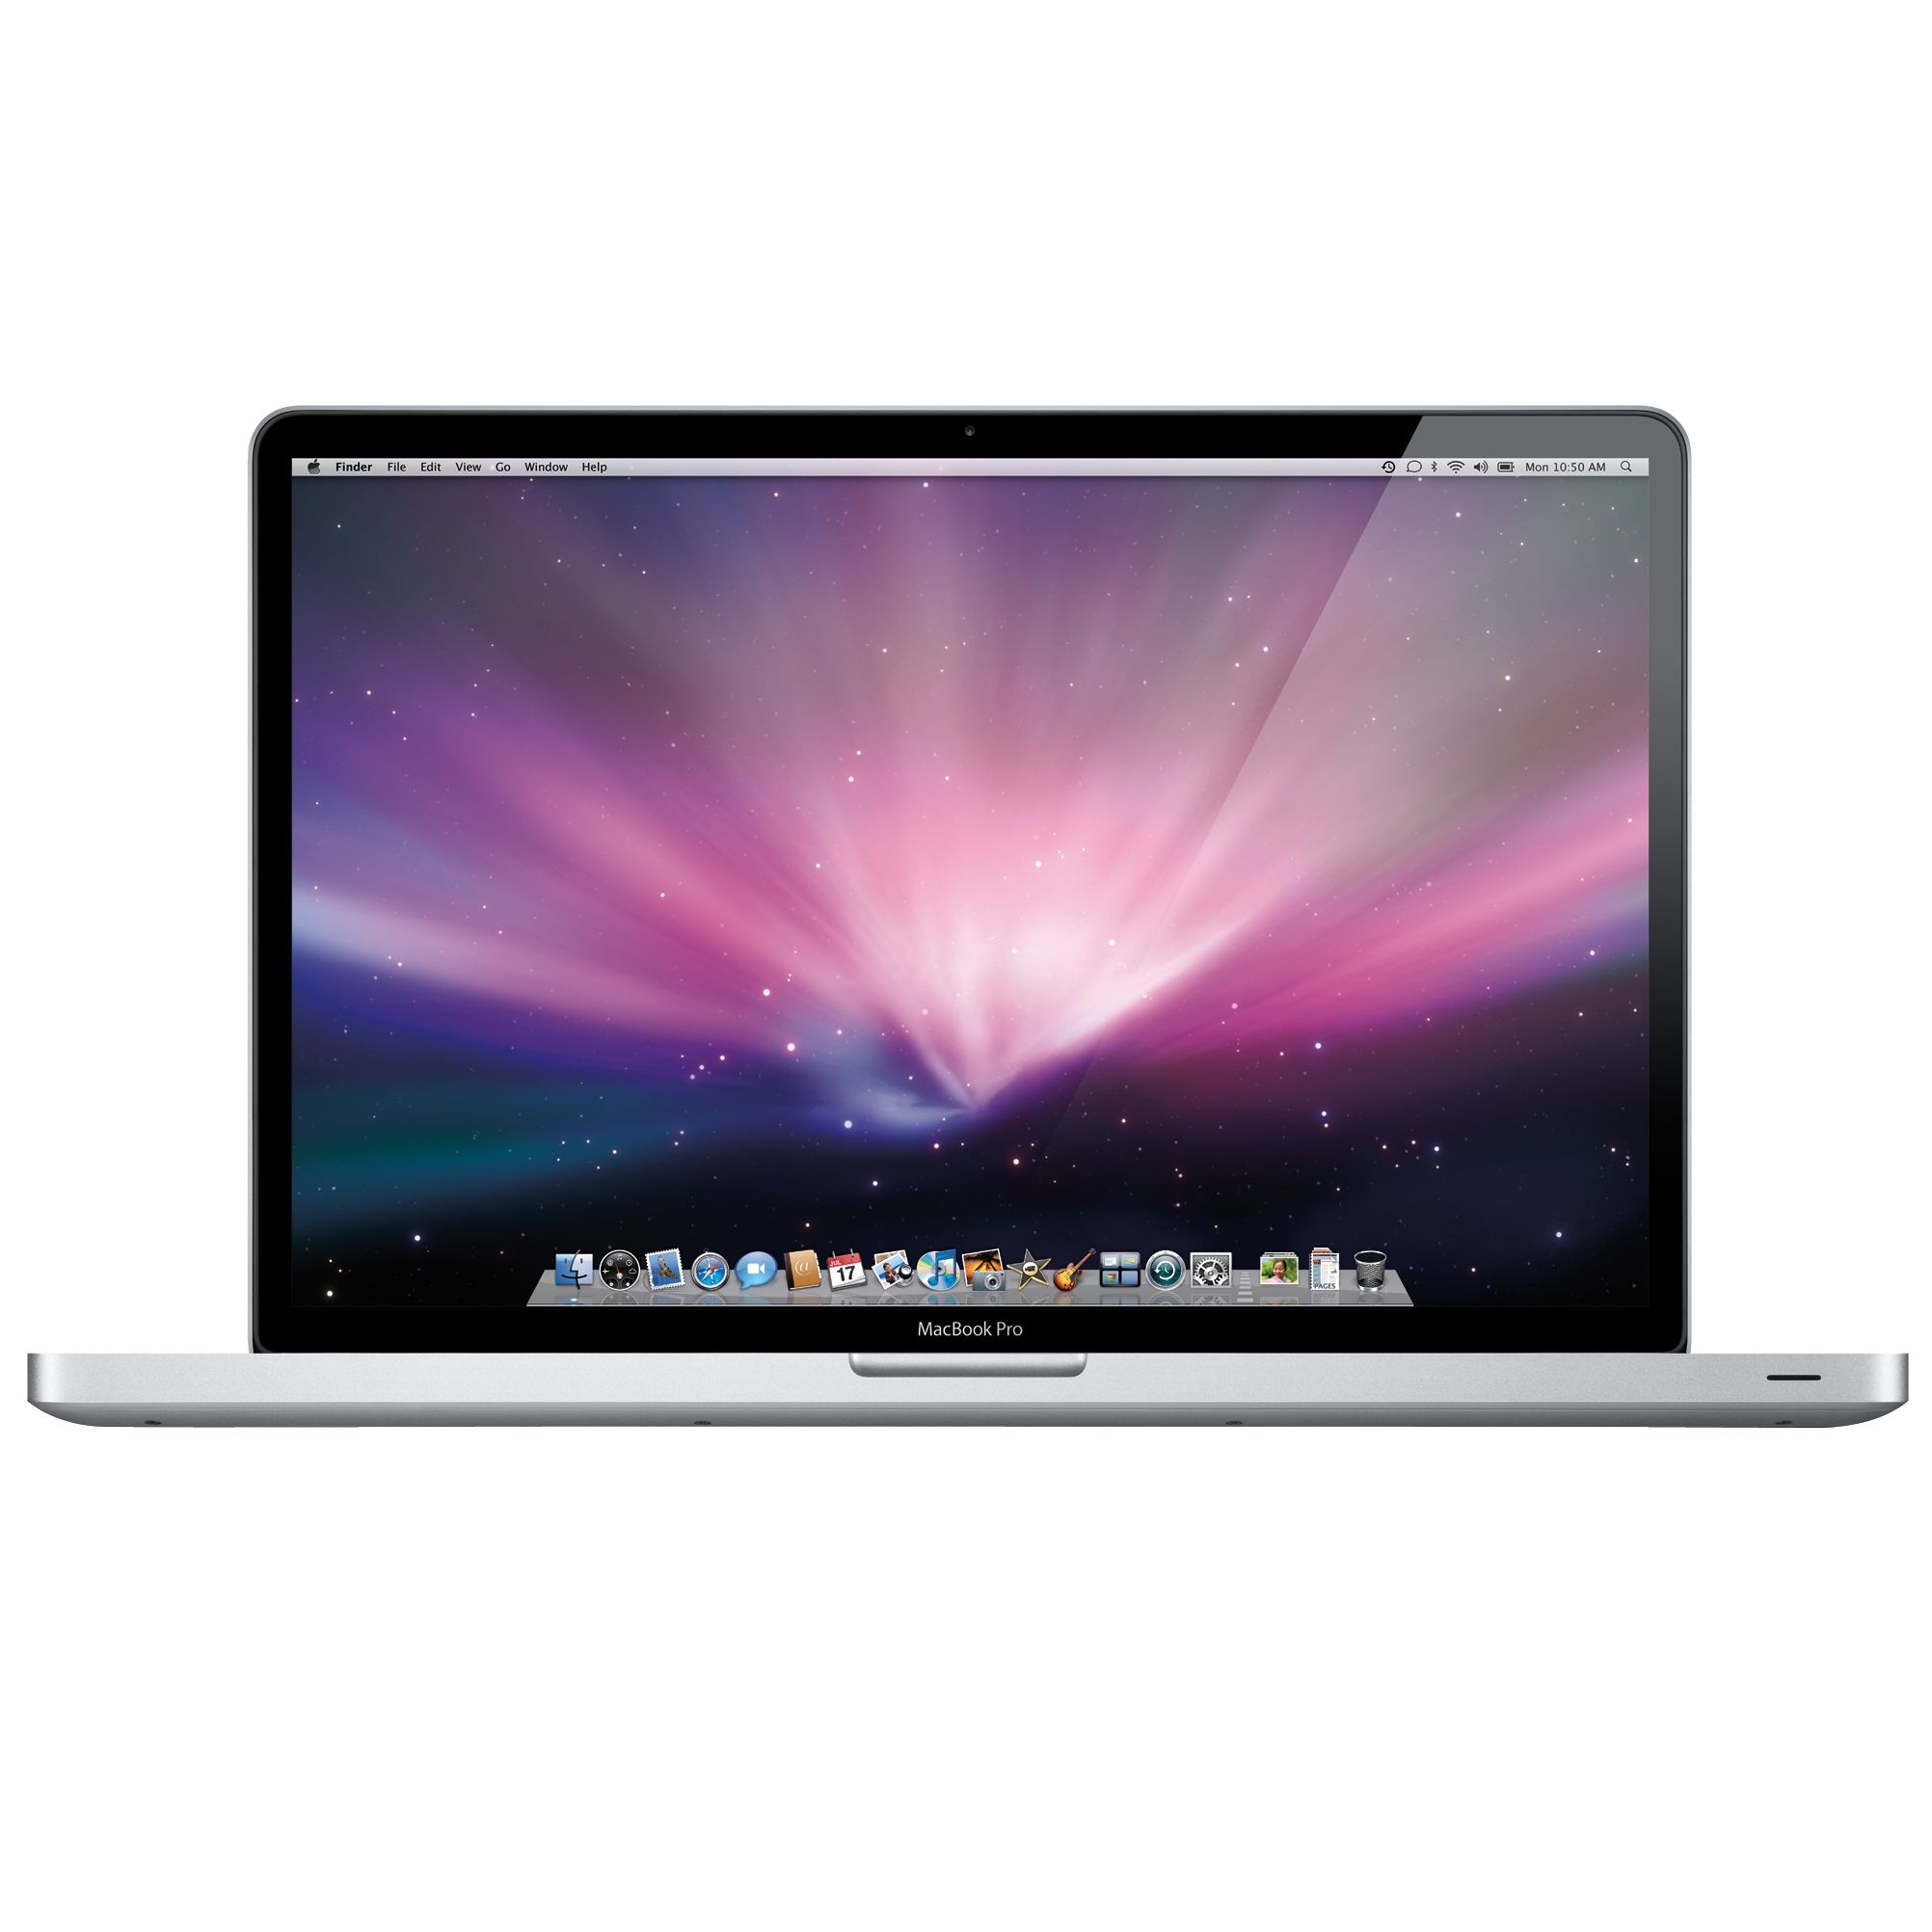 Apple MacBook Pro MC024B/A, Intel Core i5, 500GB, 2.53GHz, 4GB RAM with 17 Inch Display at John Lewis